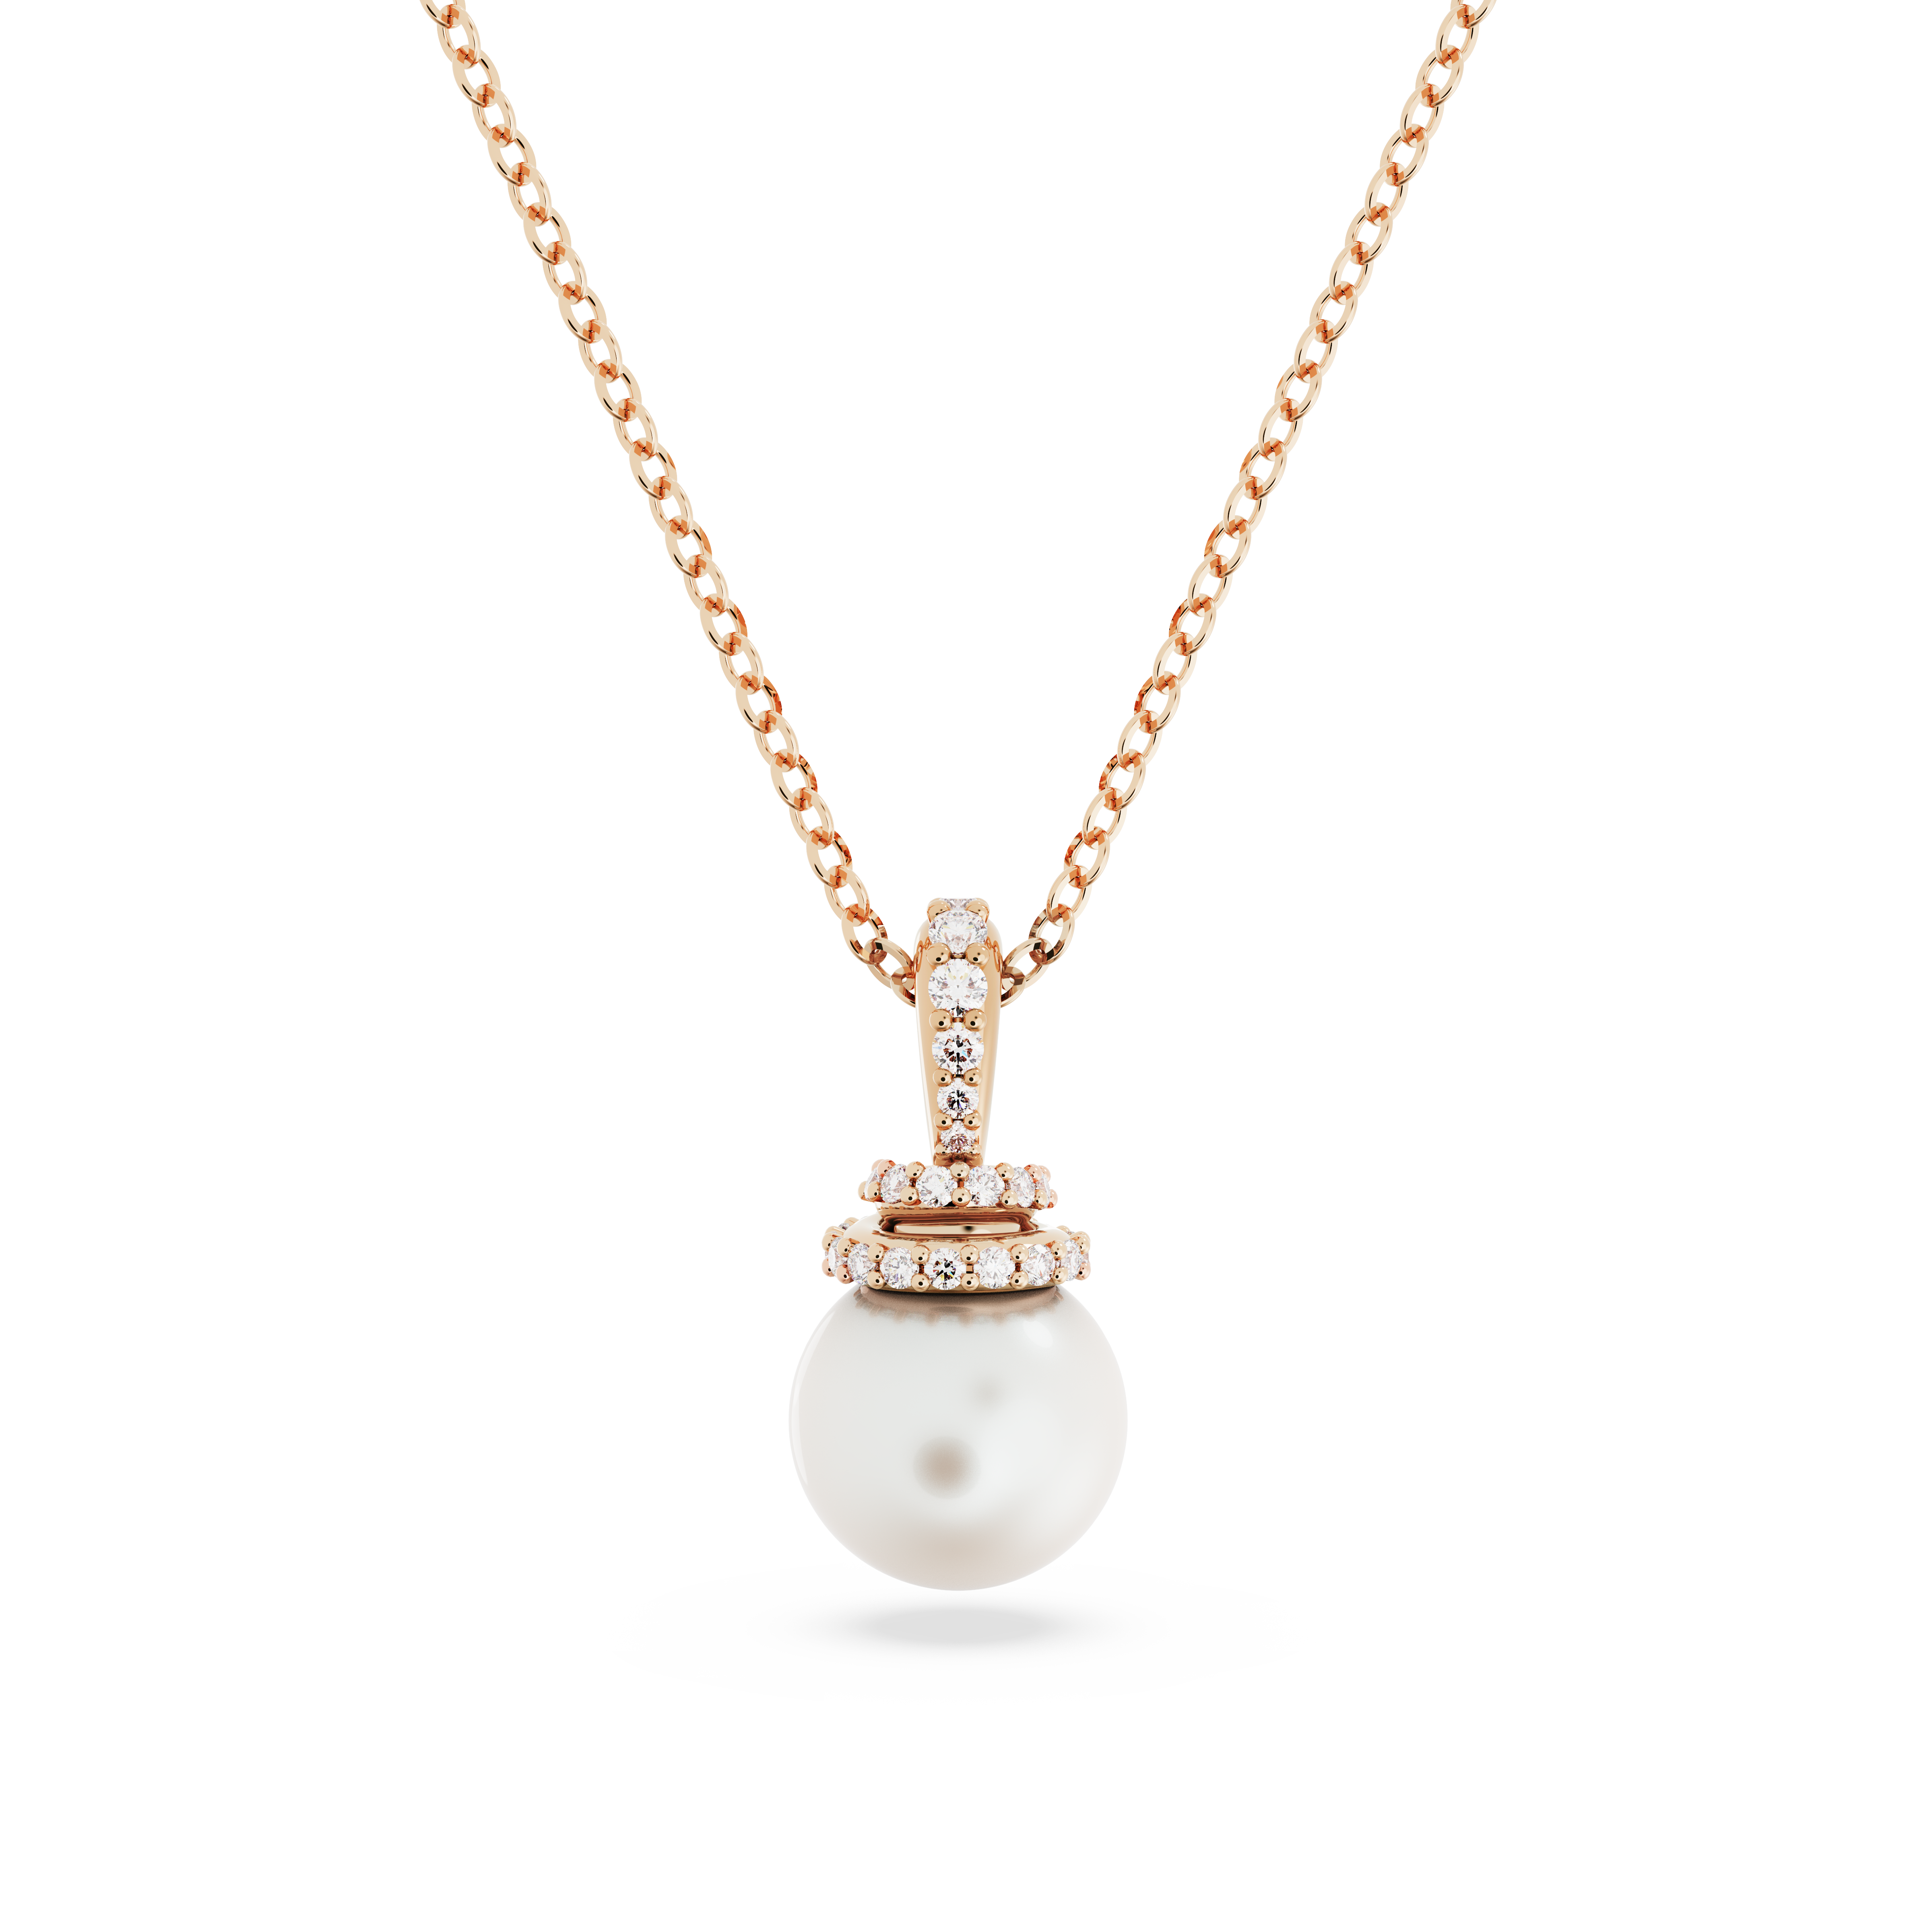 Originally pendant, White, Rose gold-tone plated by SWAROVSKI